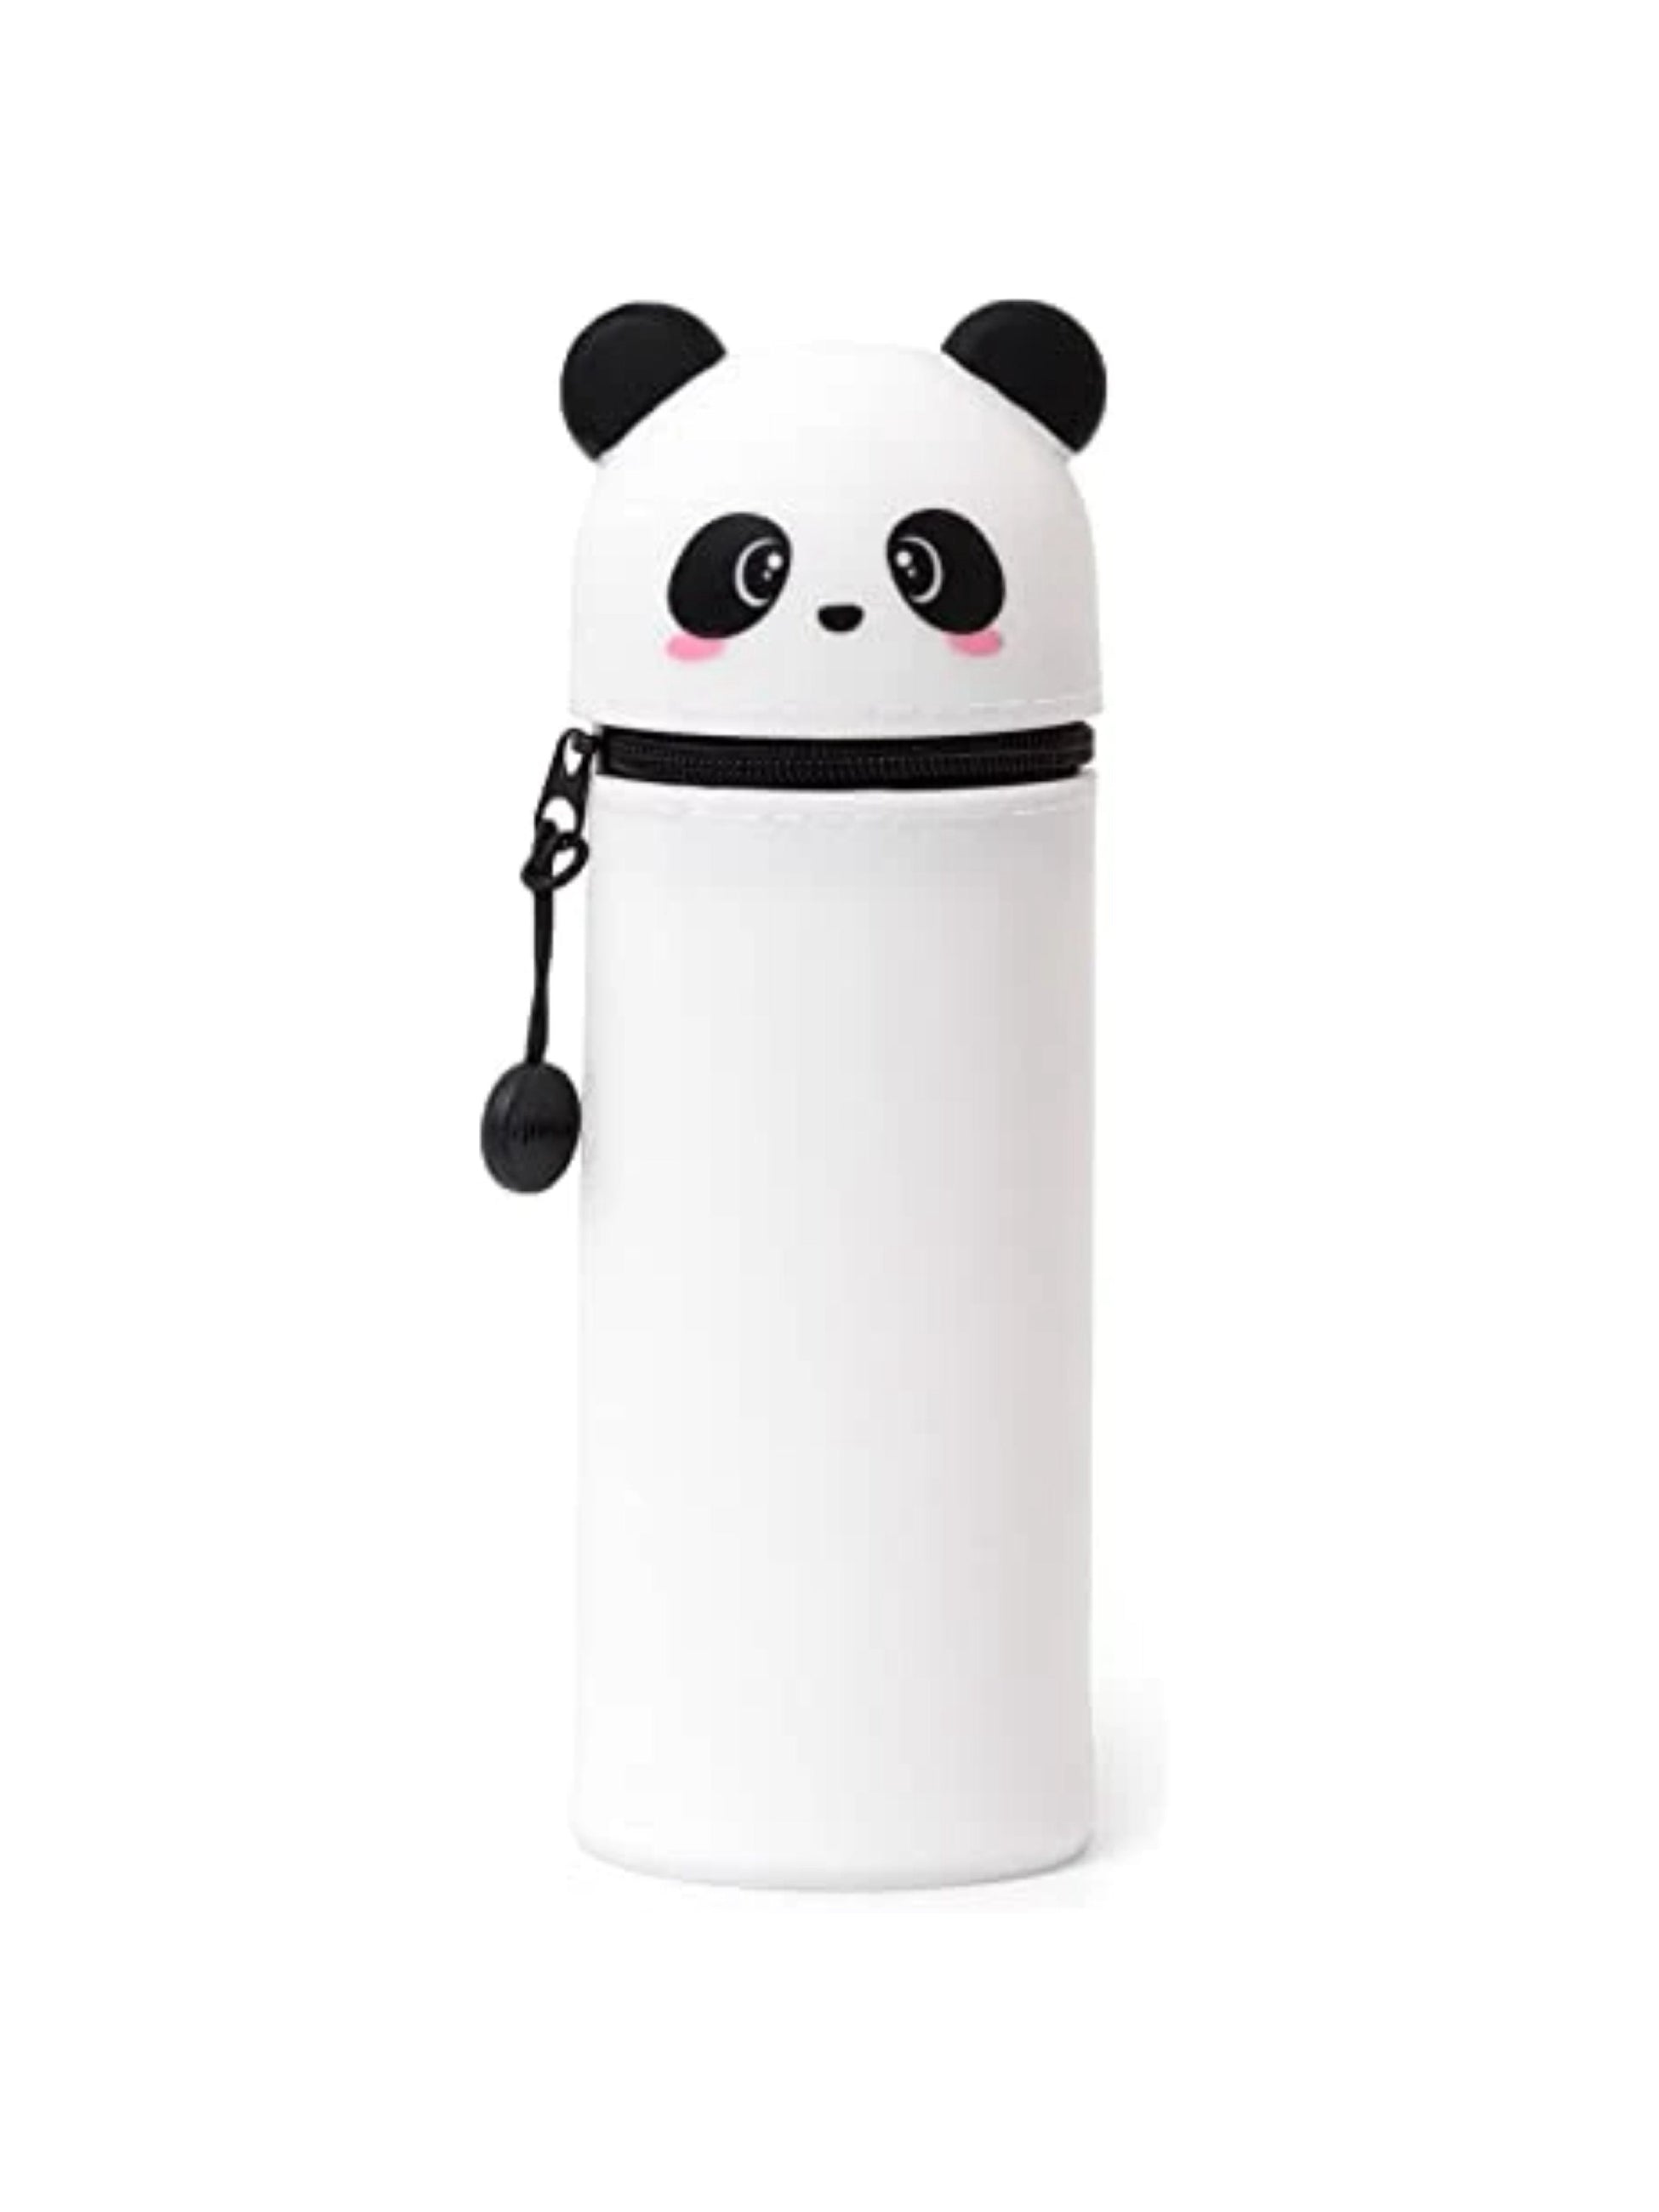 Kawaii Panda - 2 in 1 Soft Silicone Pencil Case